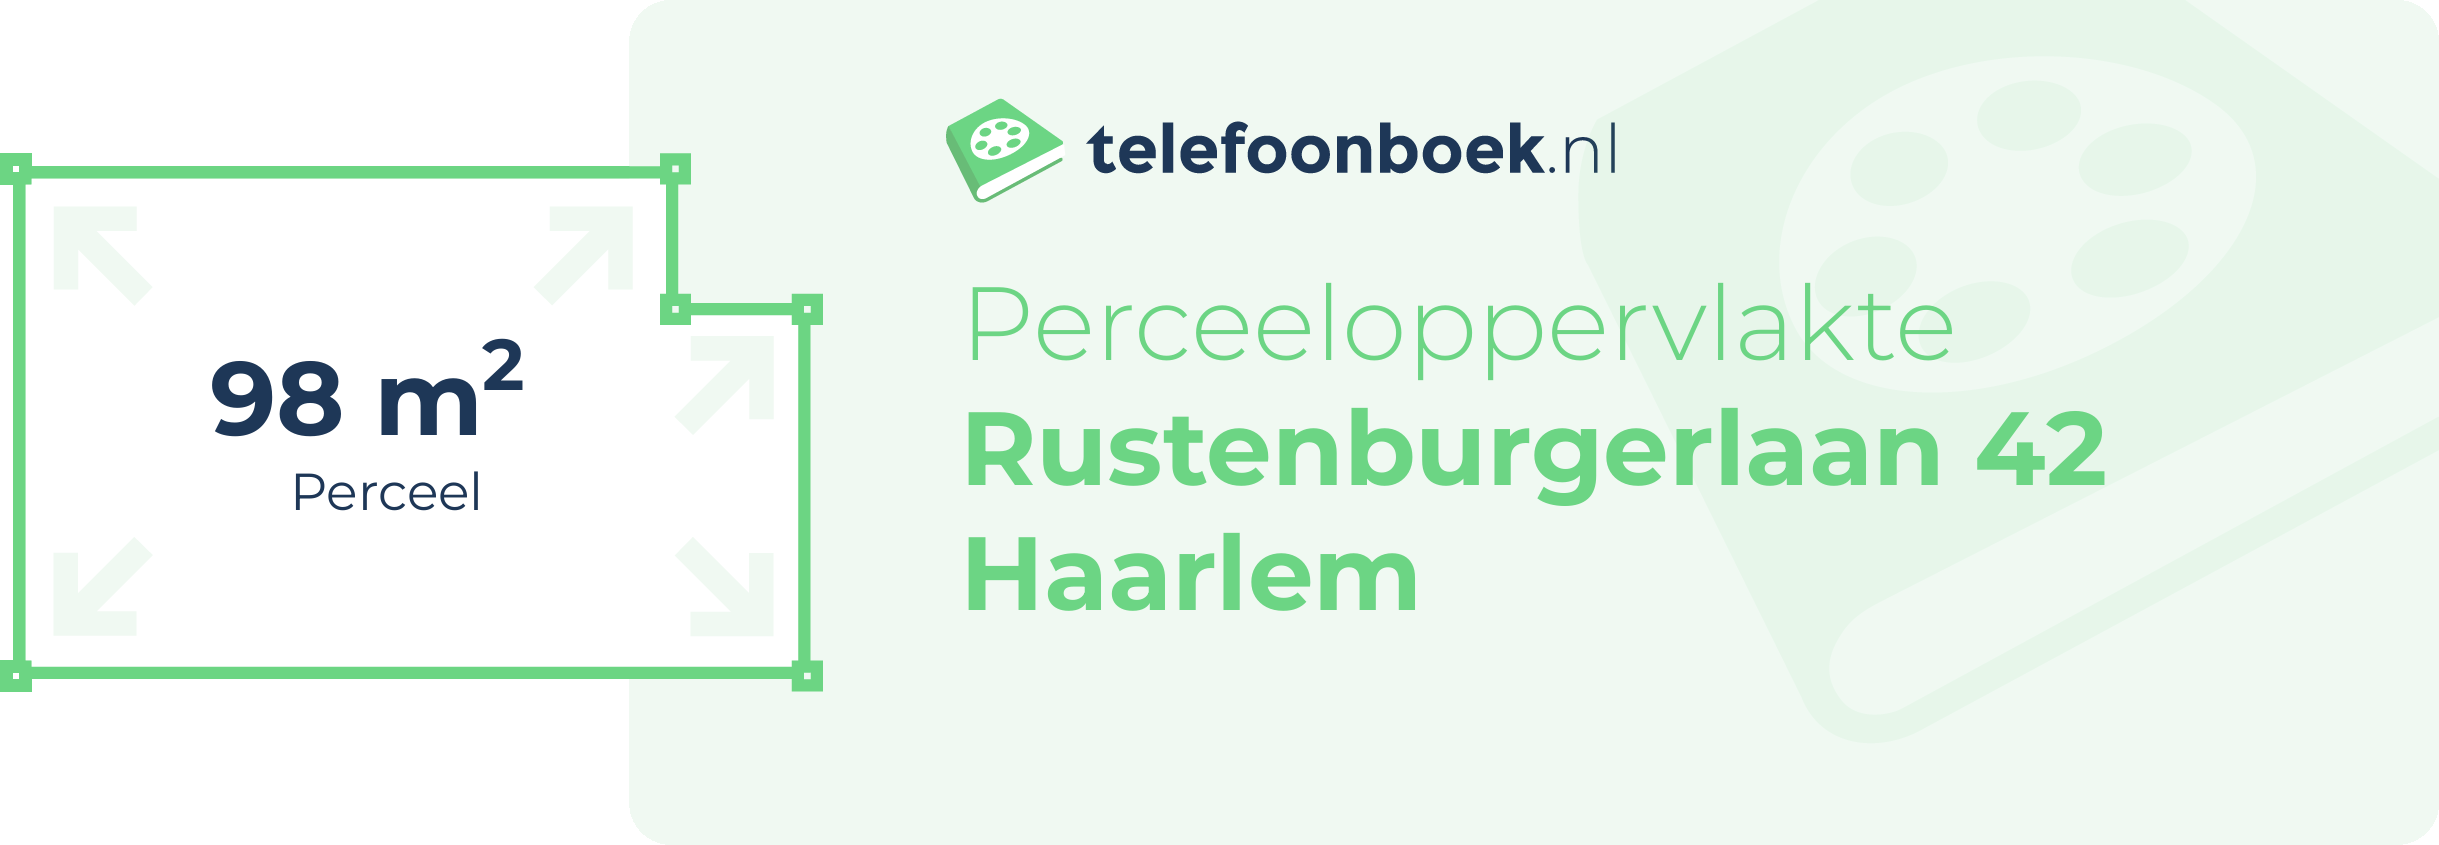 Perceeloppervlakte Rustenburgerlaan 42 Haarlem